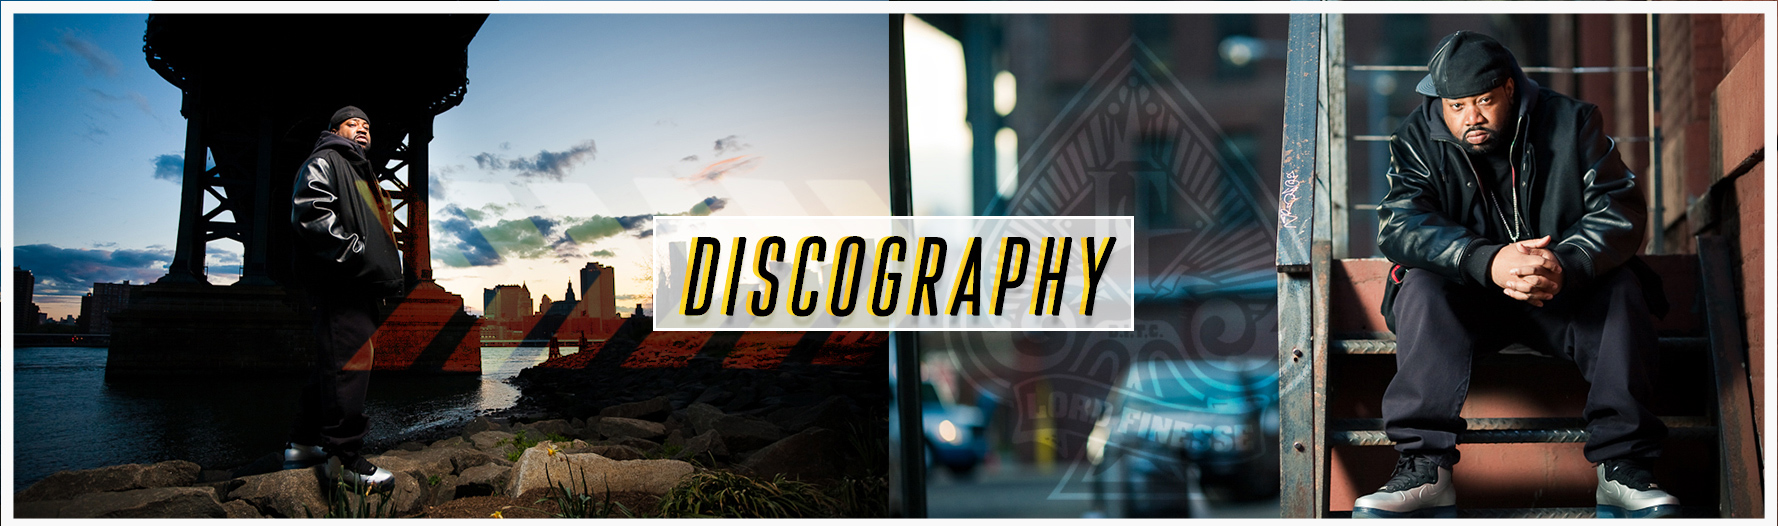 Discography-header1